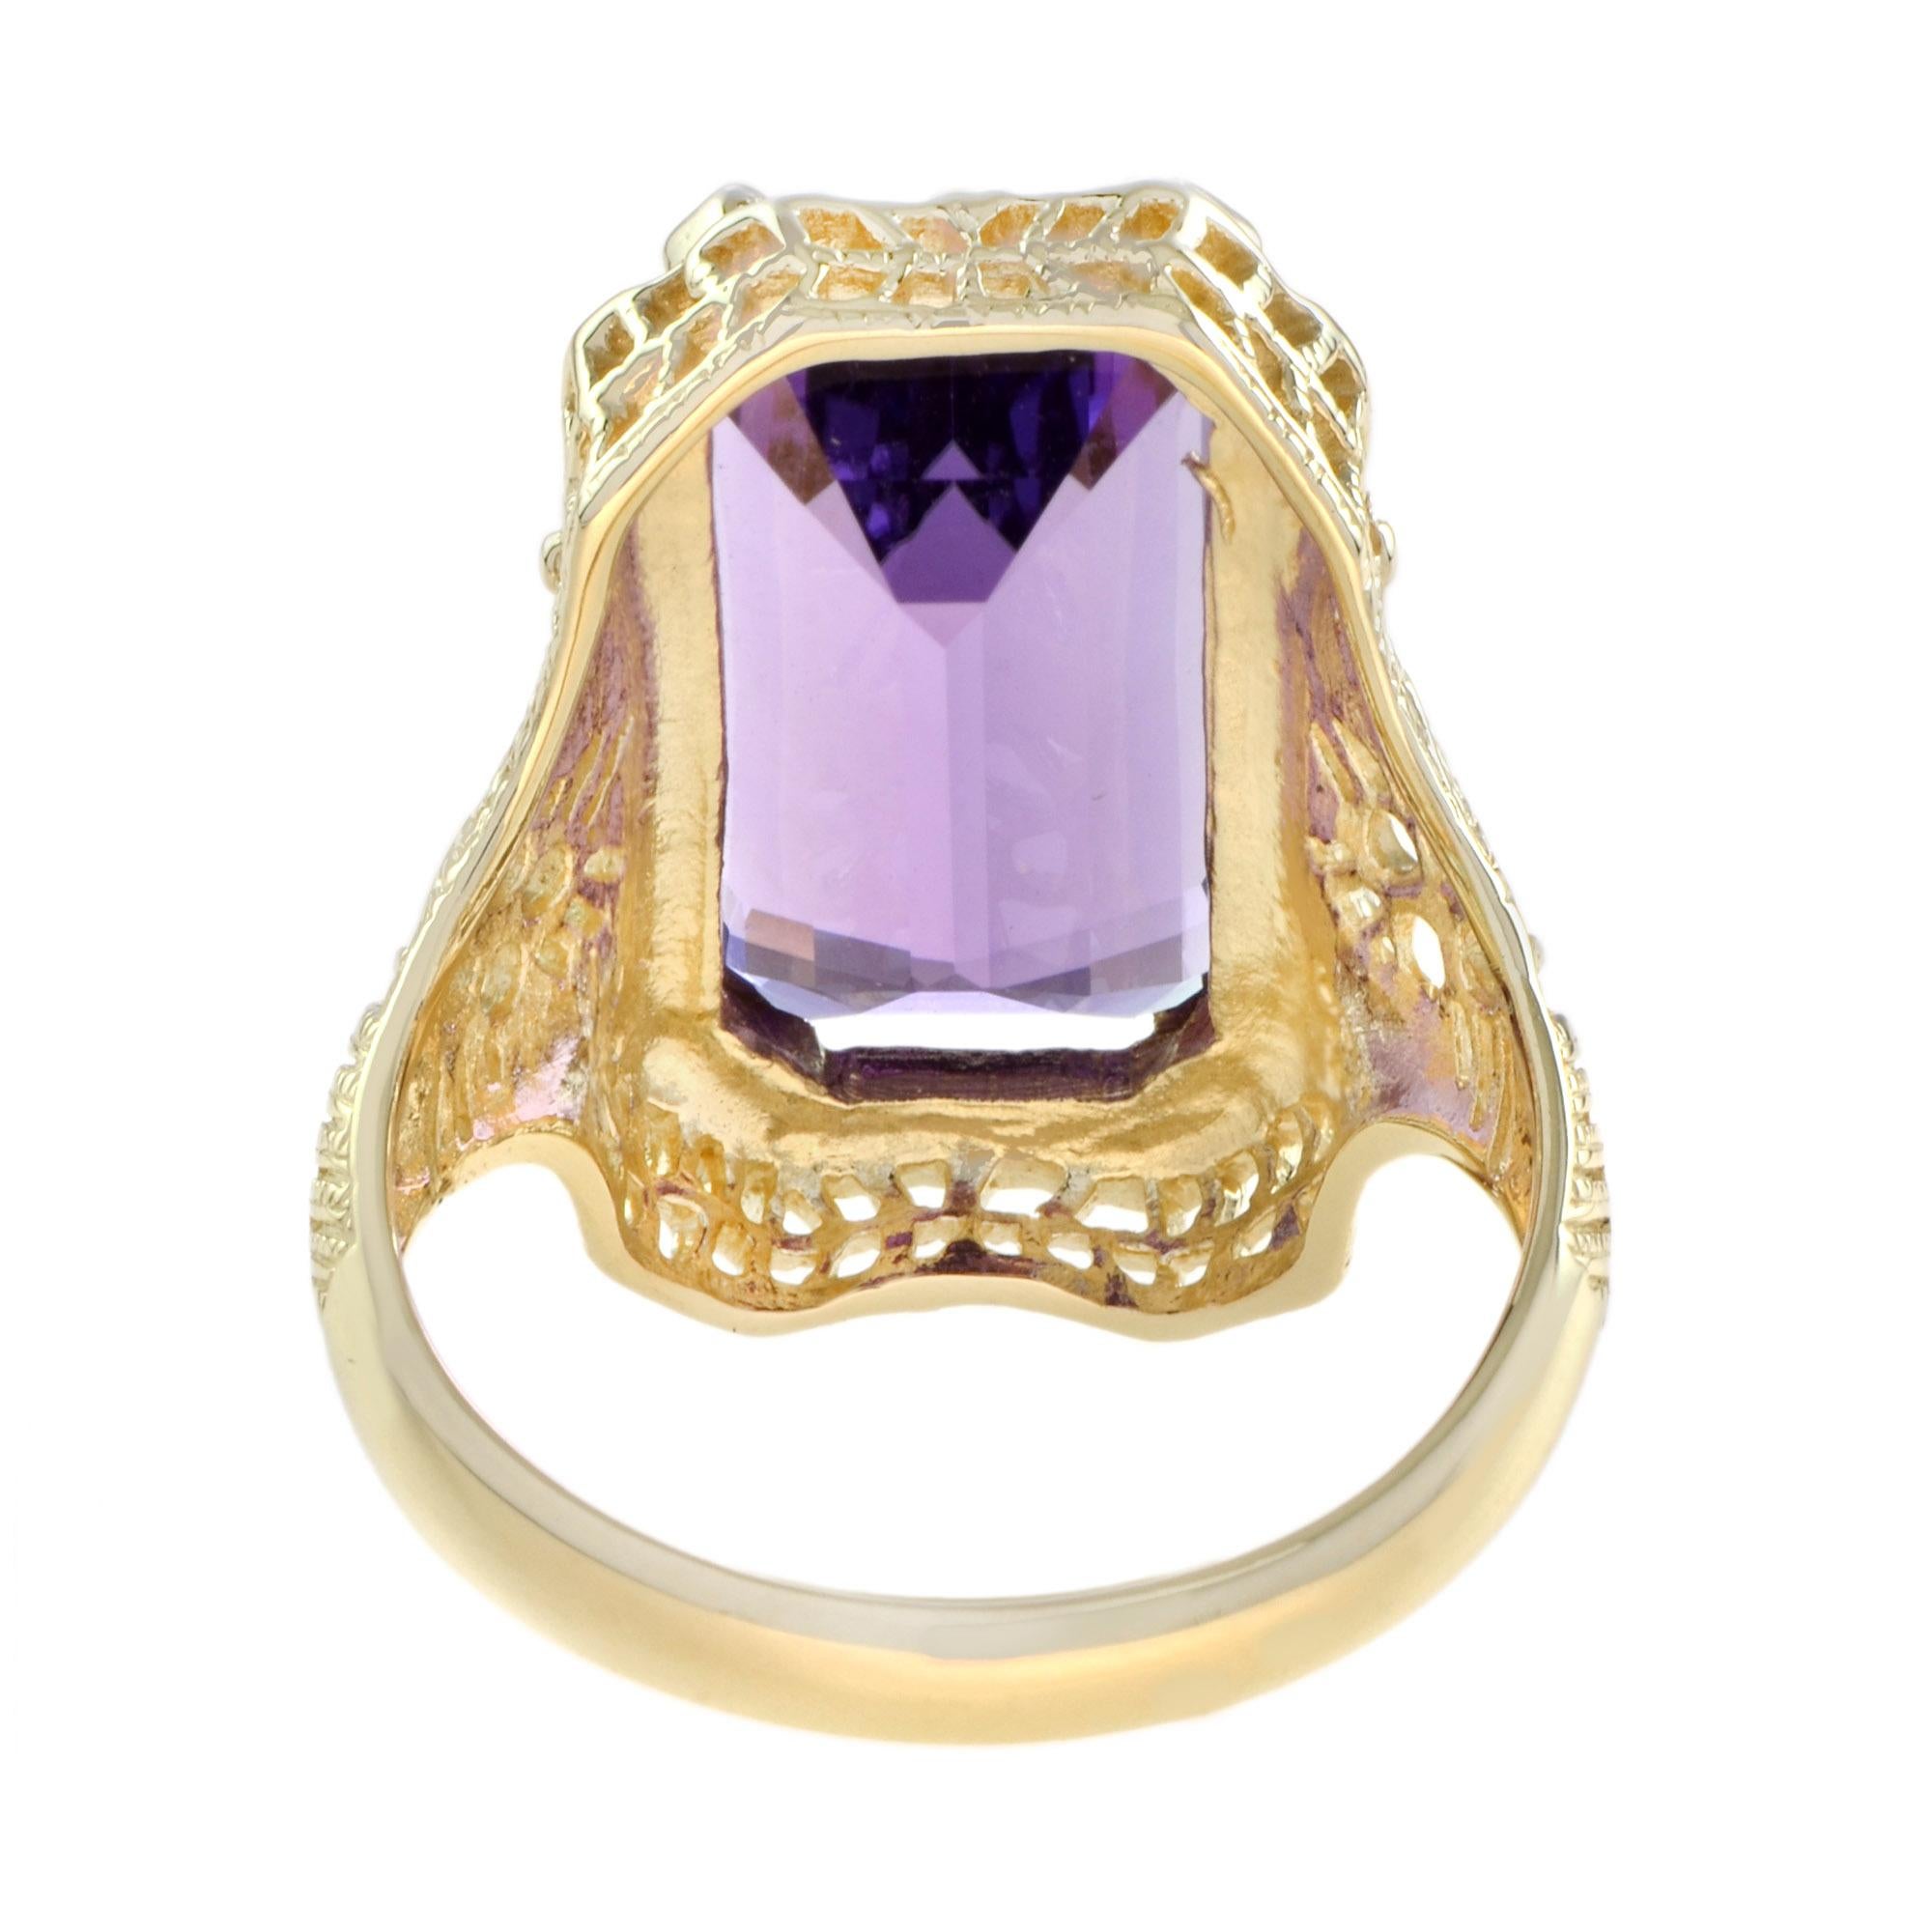 Women's or Men's Art Deco Style 9 Carats Emerald Cut Amethyst Filigree Ring in 9K Yellow Gold